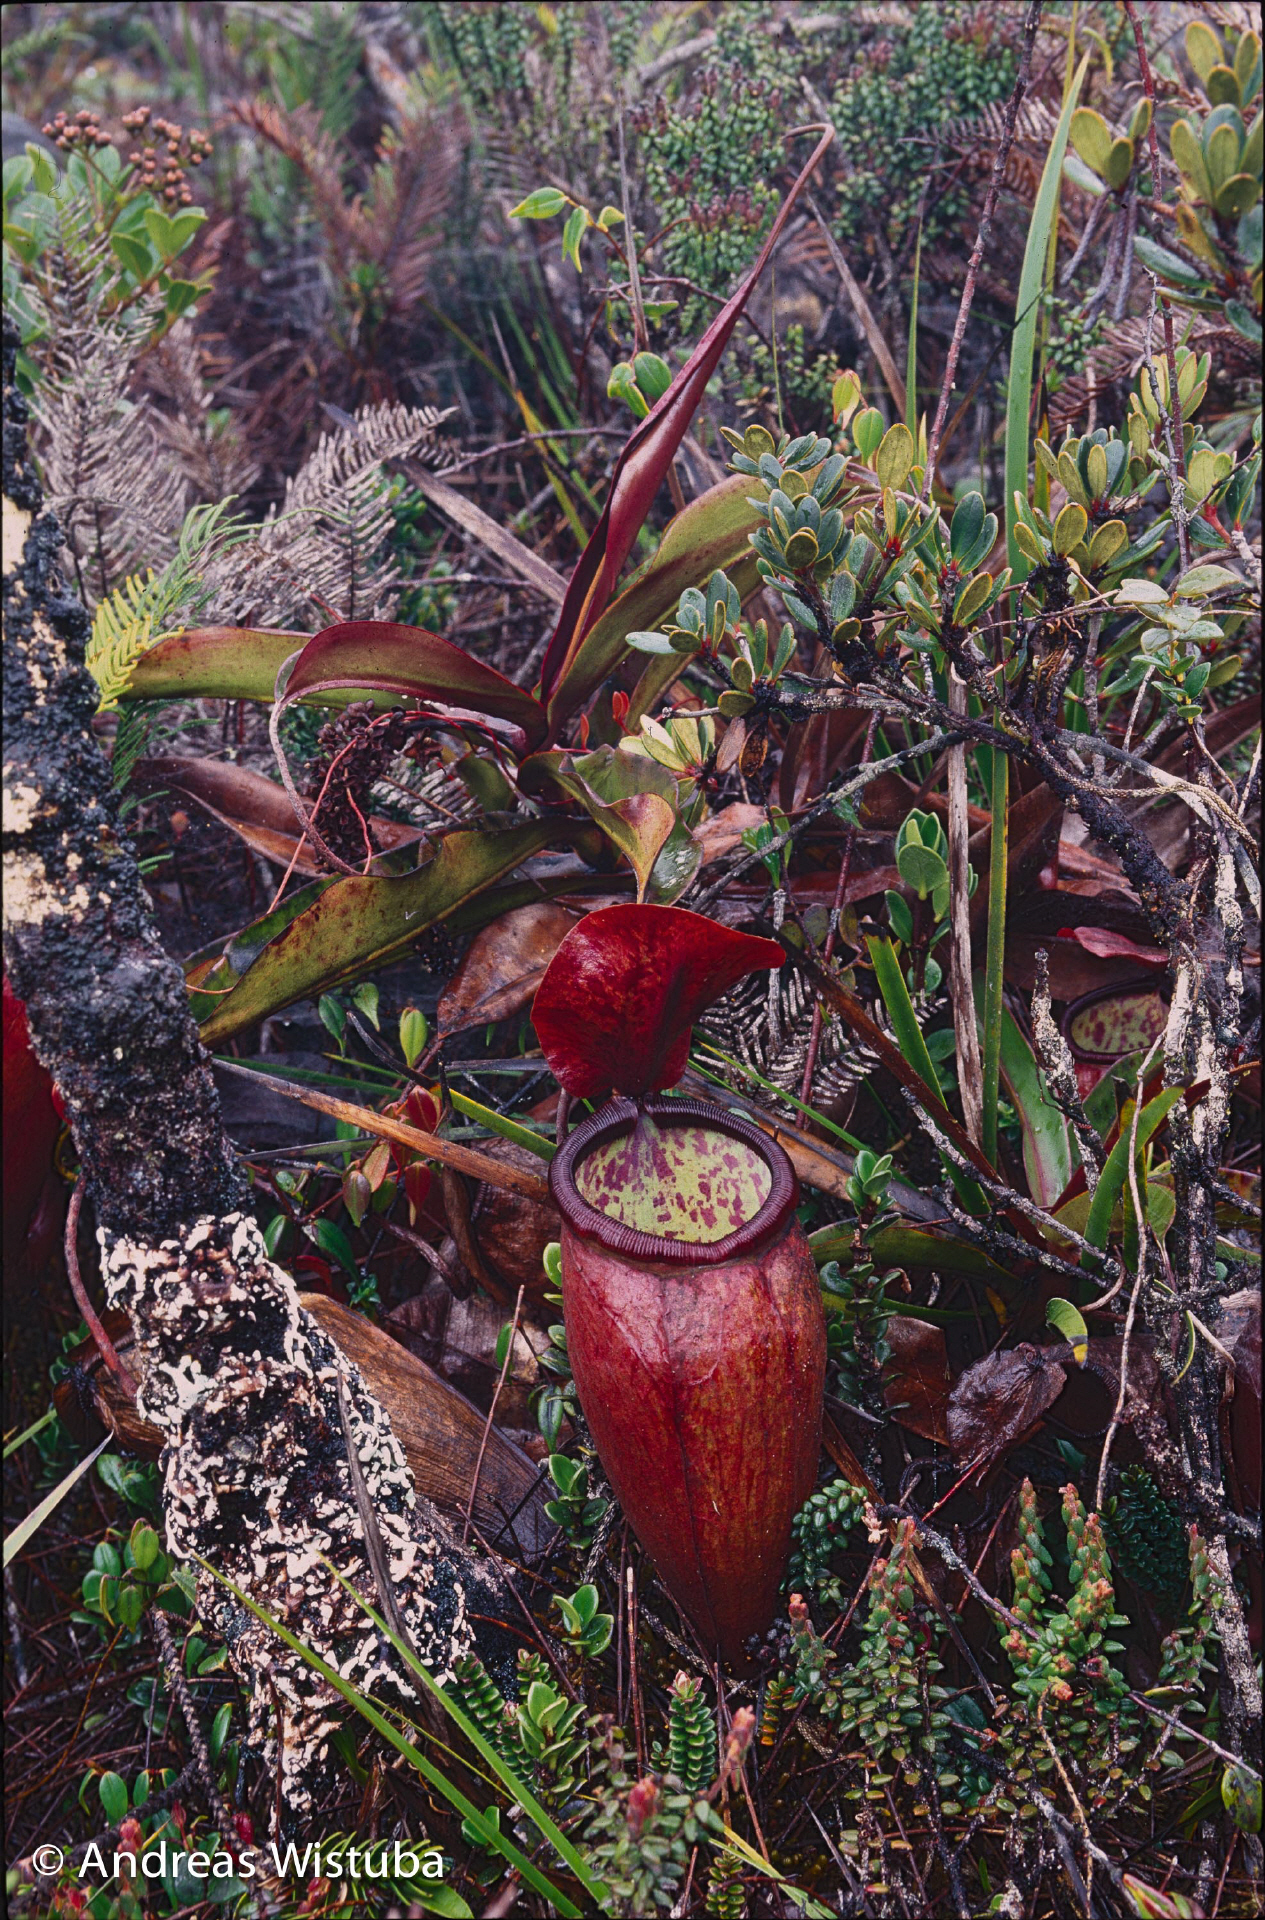 Nepenthes lamii (Doorman's Top)